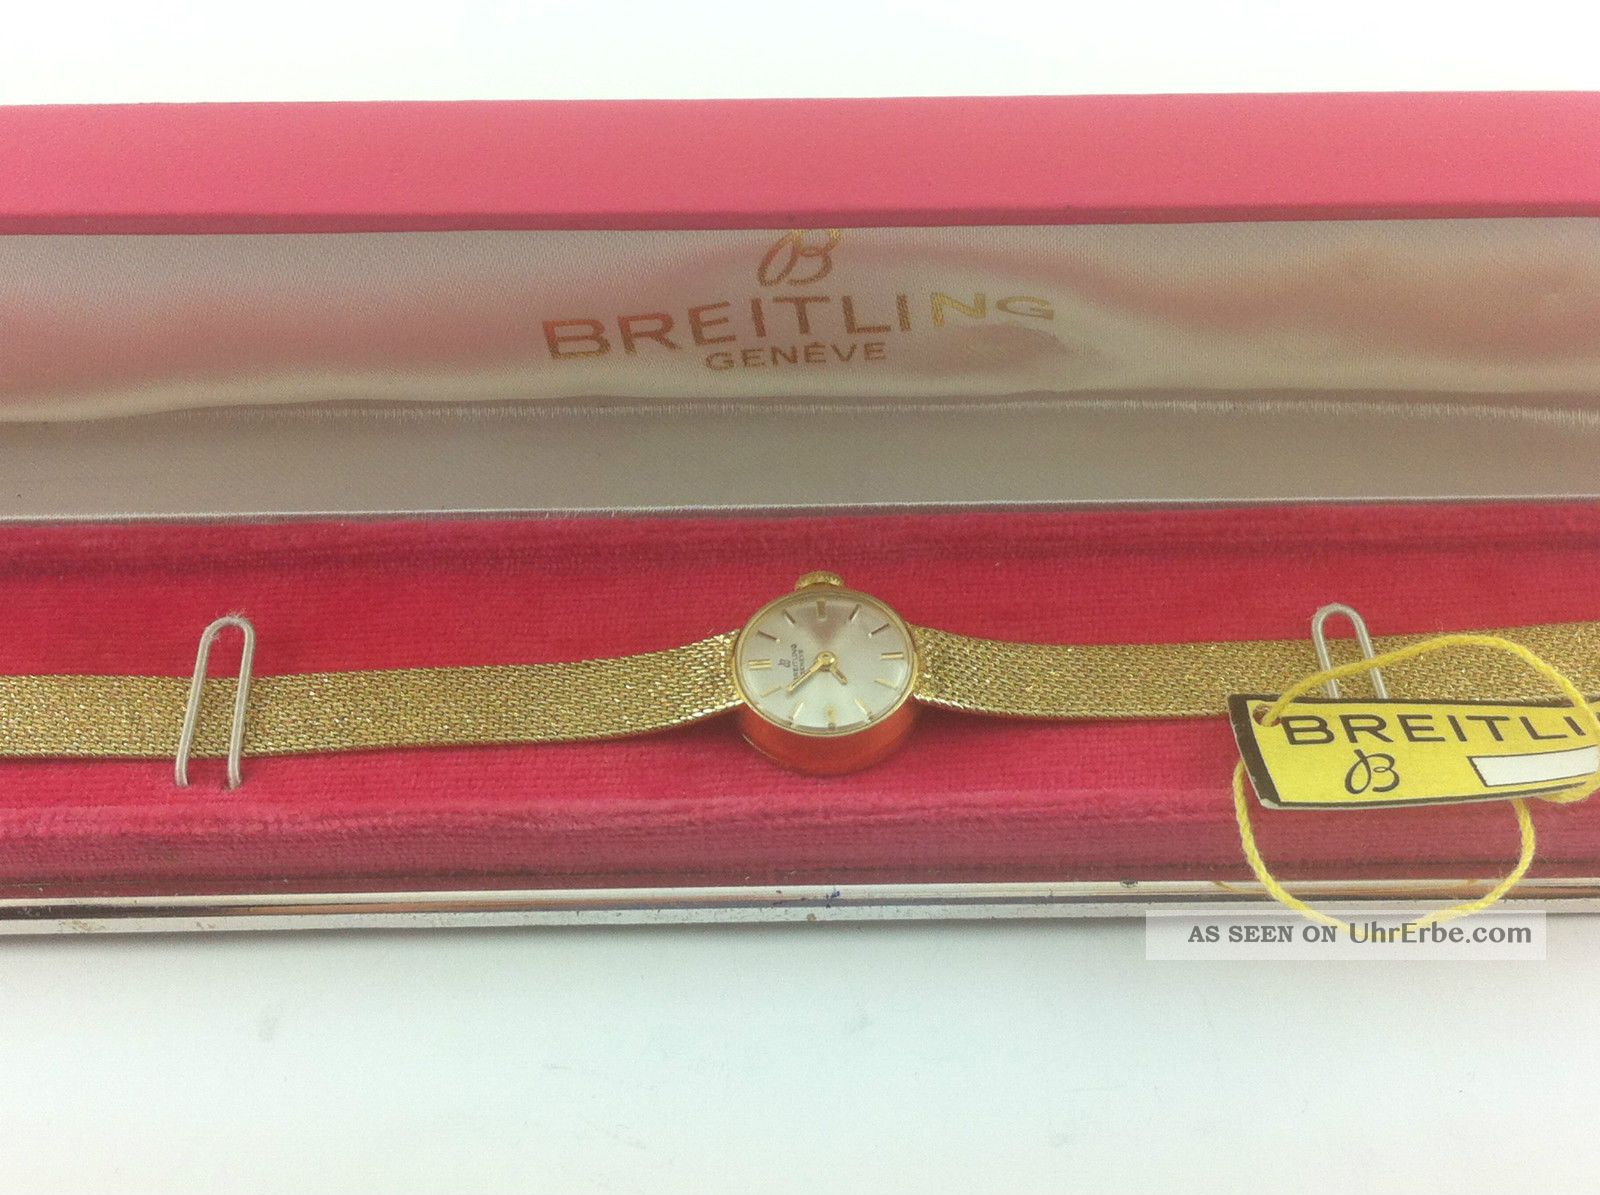 Breitling Geneve - Damen - Uhr - 14k Gold 585 - Luxus - Uhr - Handaufzug - Edel Armbanduhren Bild